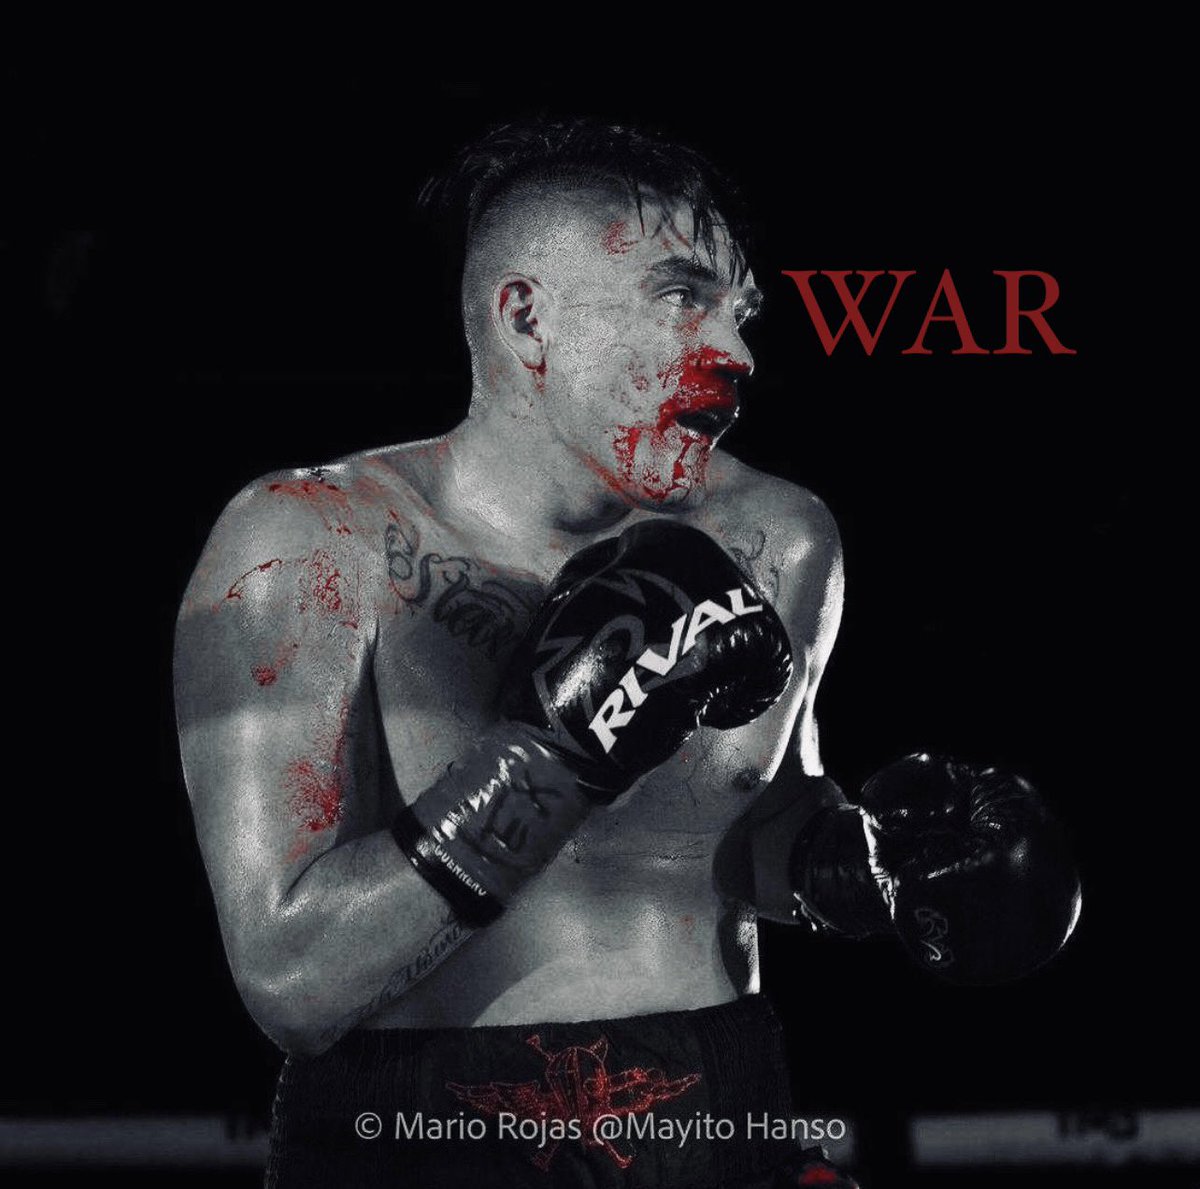 Spit In The Face Of Defeat ☠️
#boxing #boxingmotivation #combatsports #war #warrior #WarriorAthletes #usmc #recon #SanAntonio #Texas